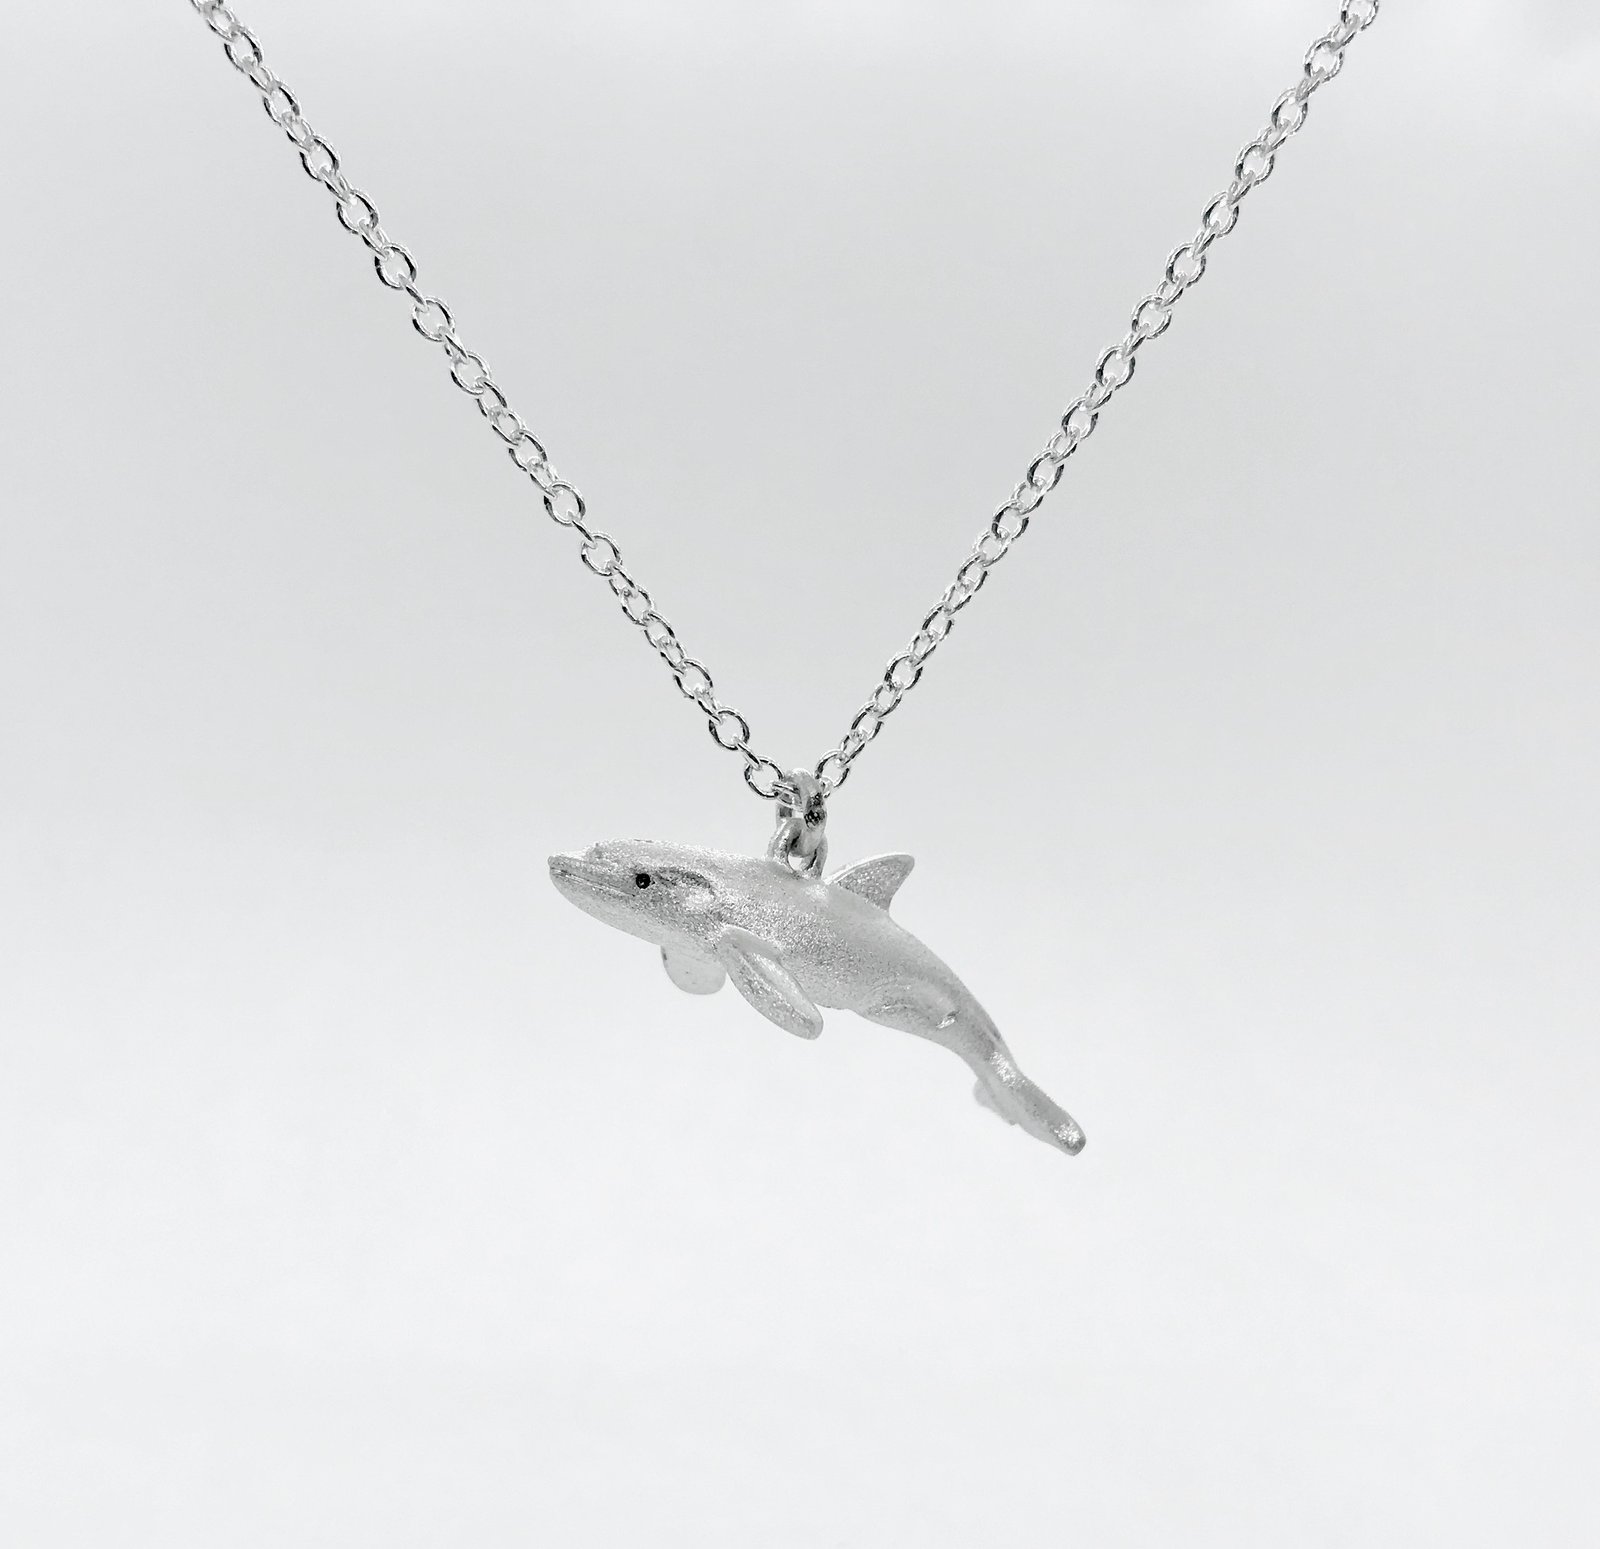 Tiger Shark Necklace – SEA LIFE Sydney Aquarium